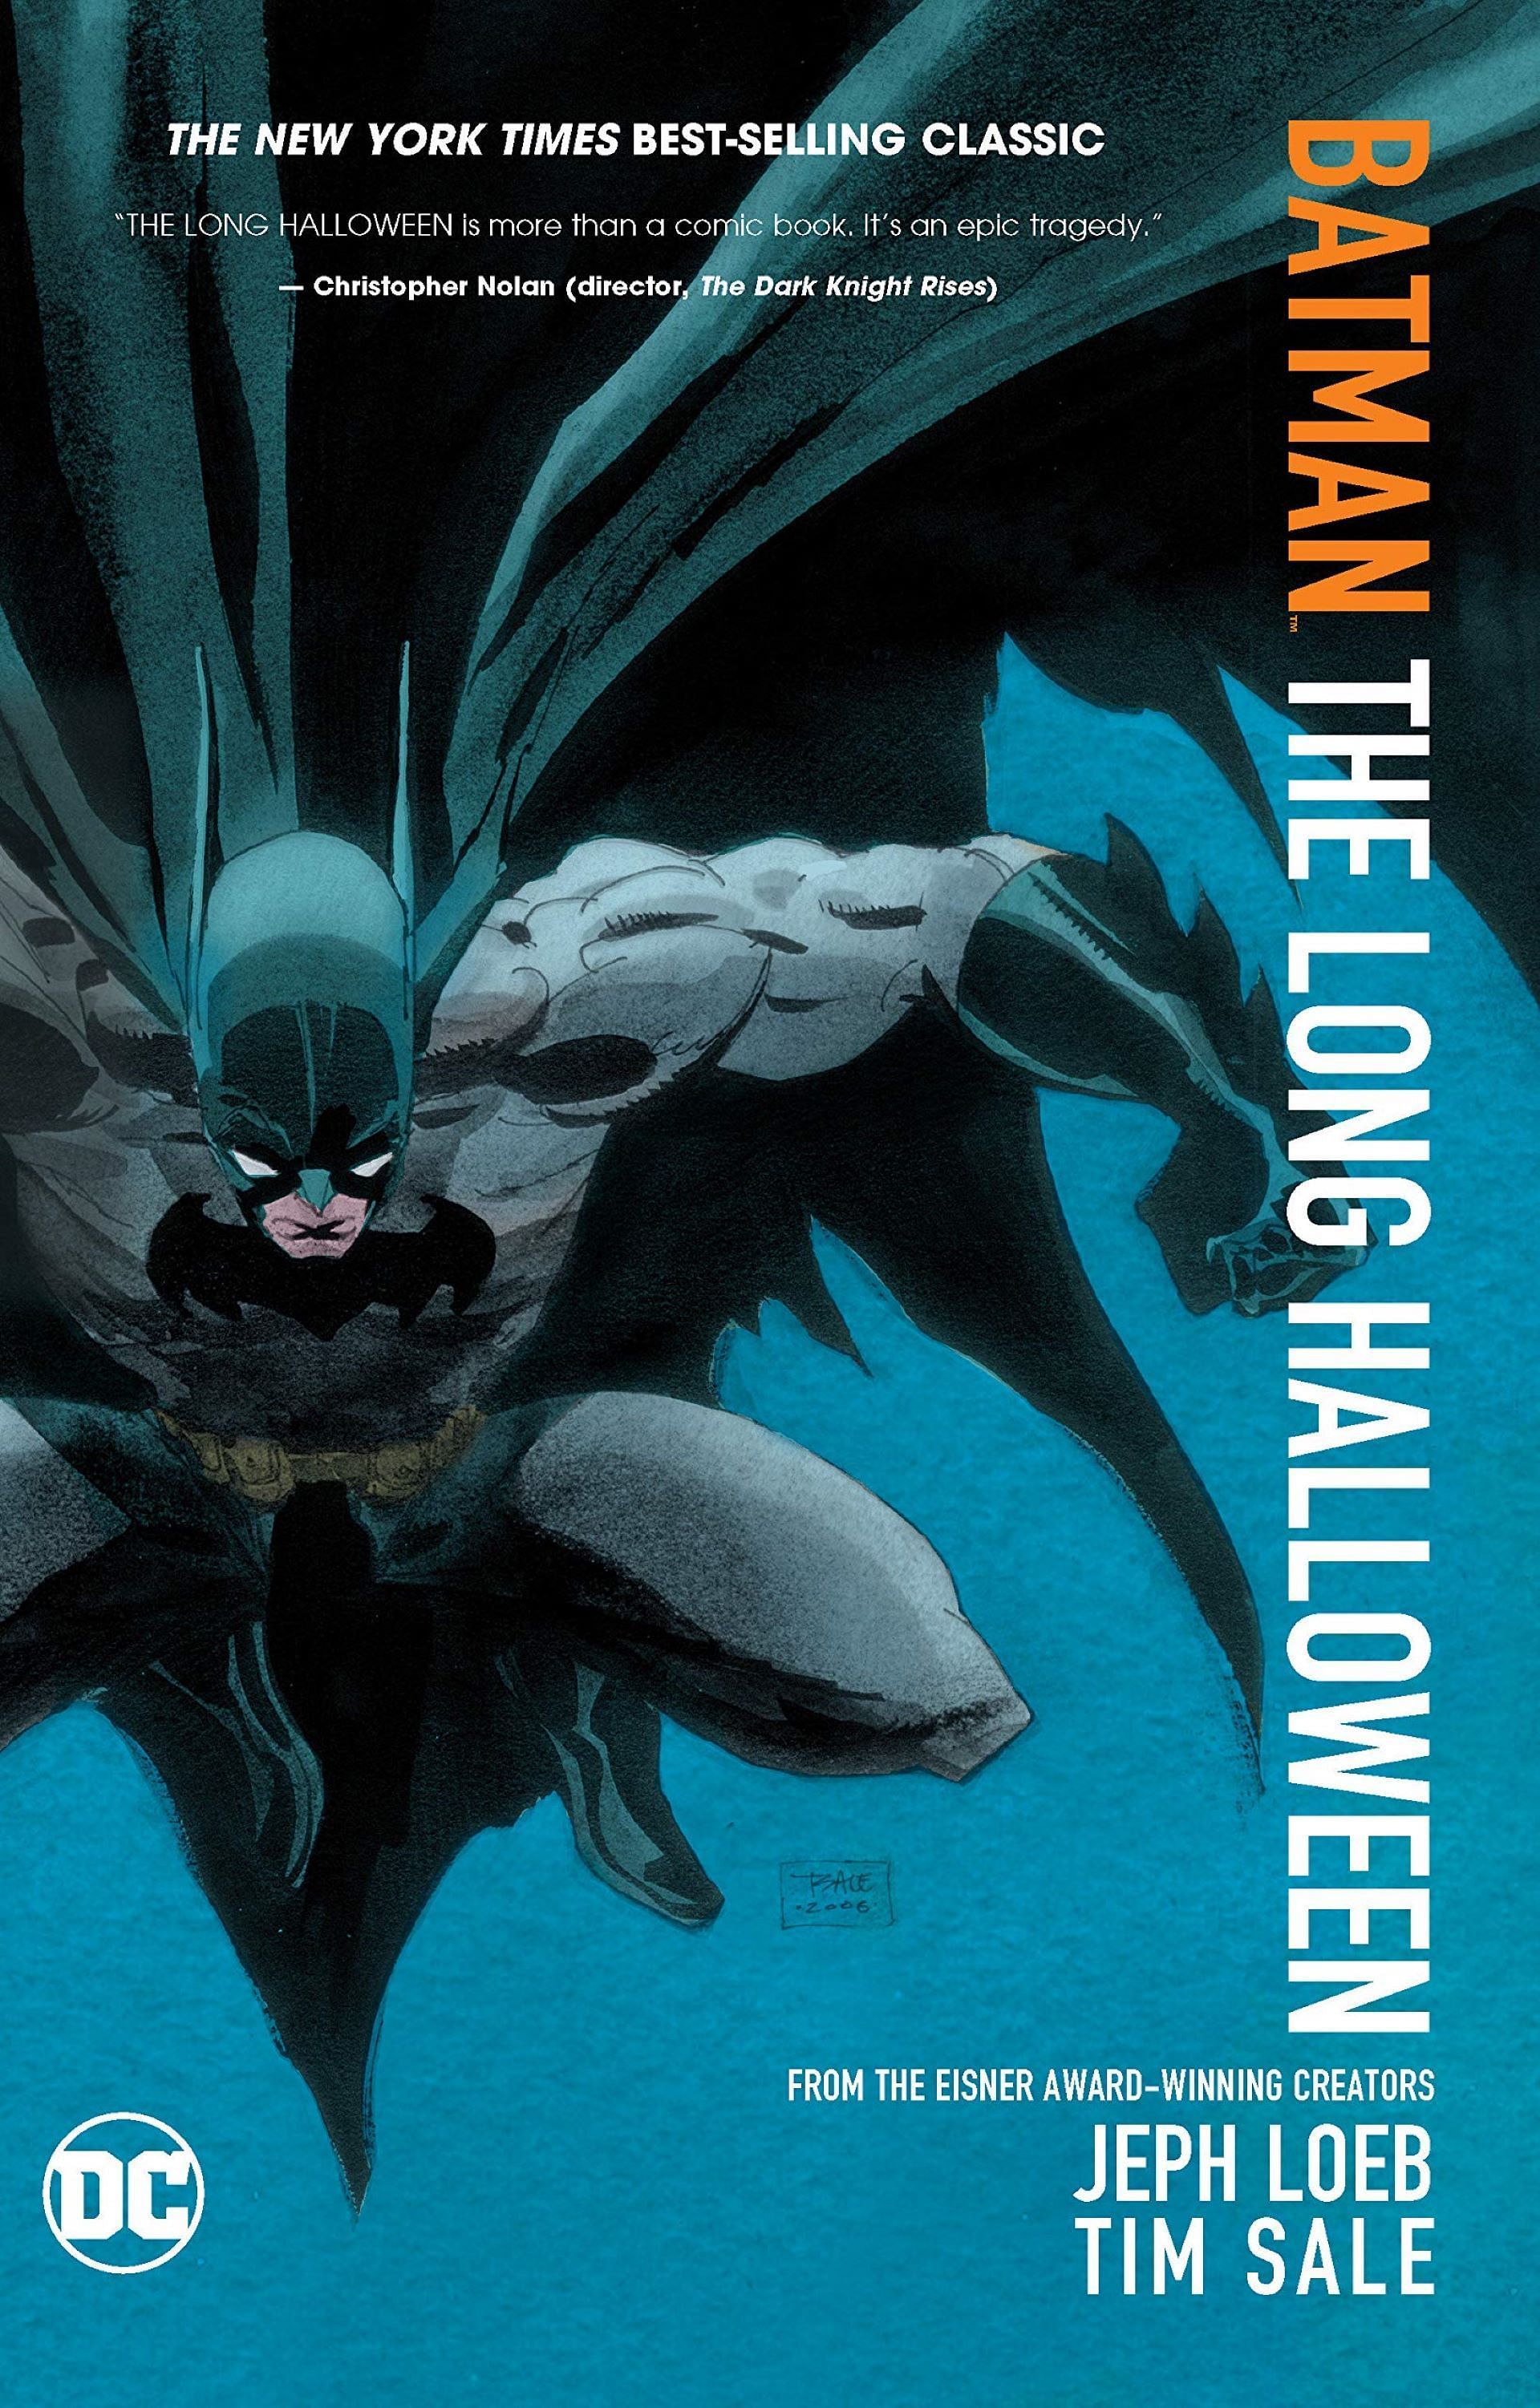 Batman: The Long Halloween (Image via DC)